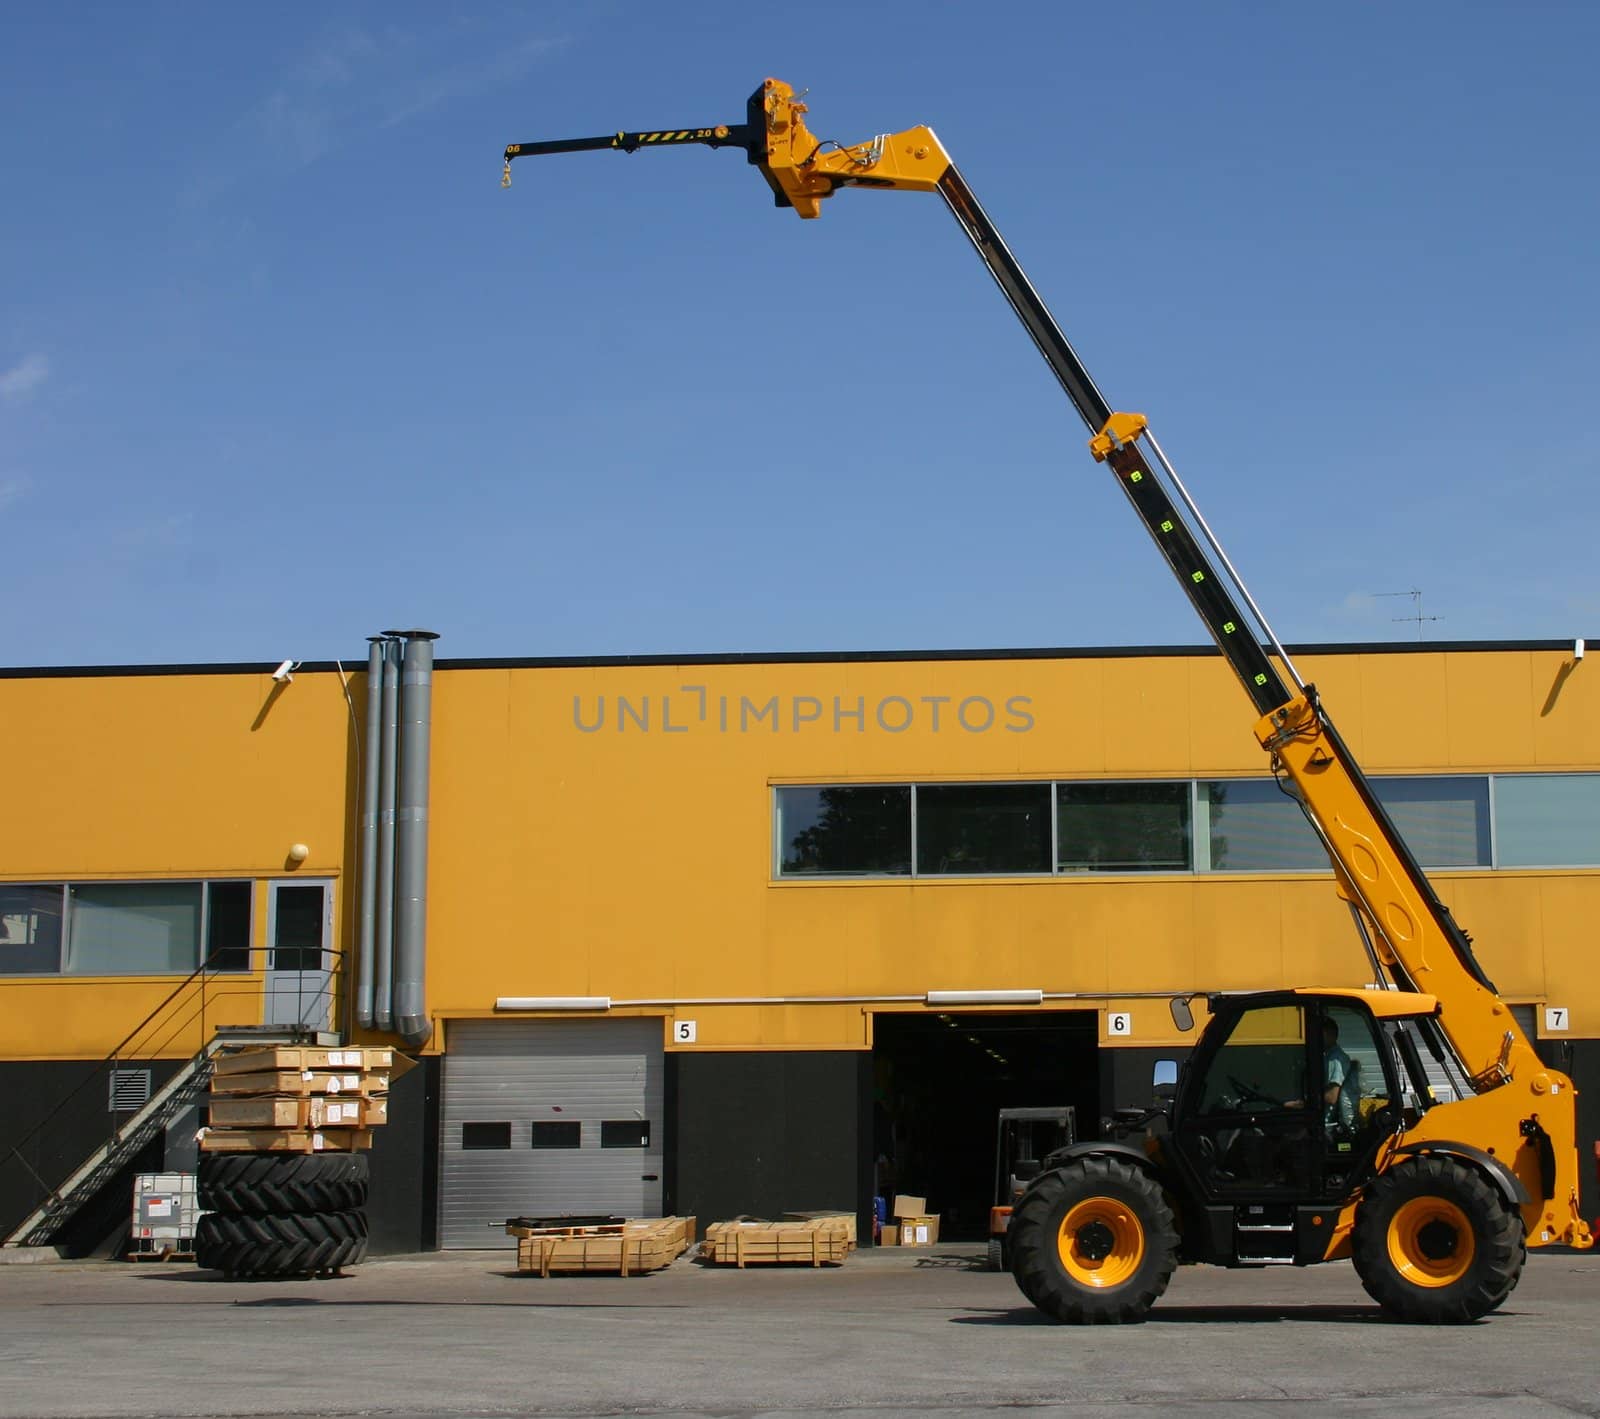 Elevating crane near a warehouse by AlexandrePavlov